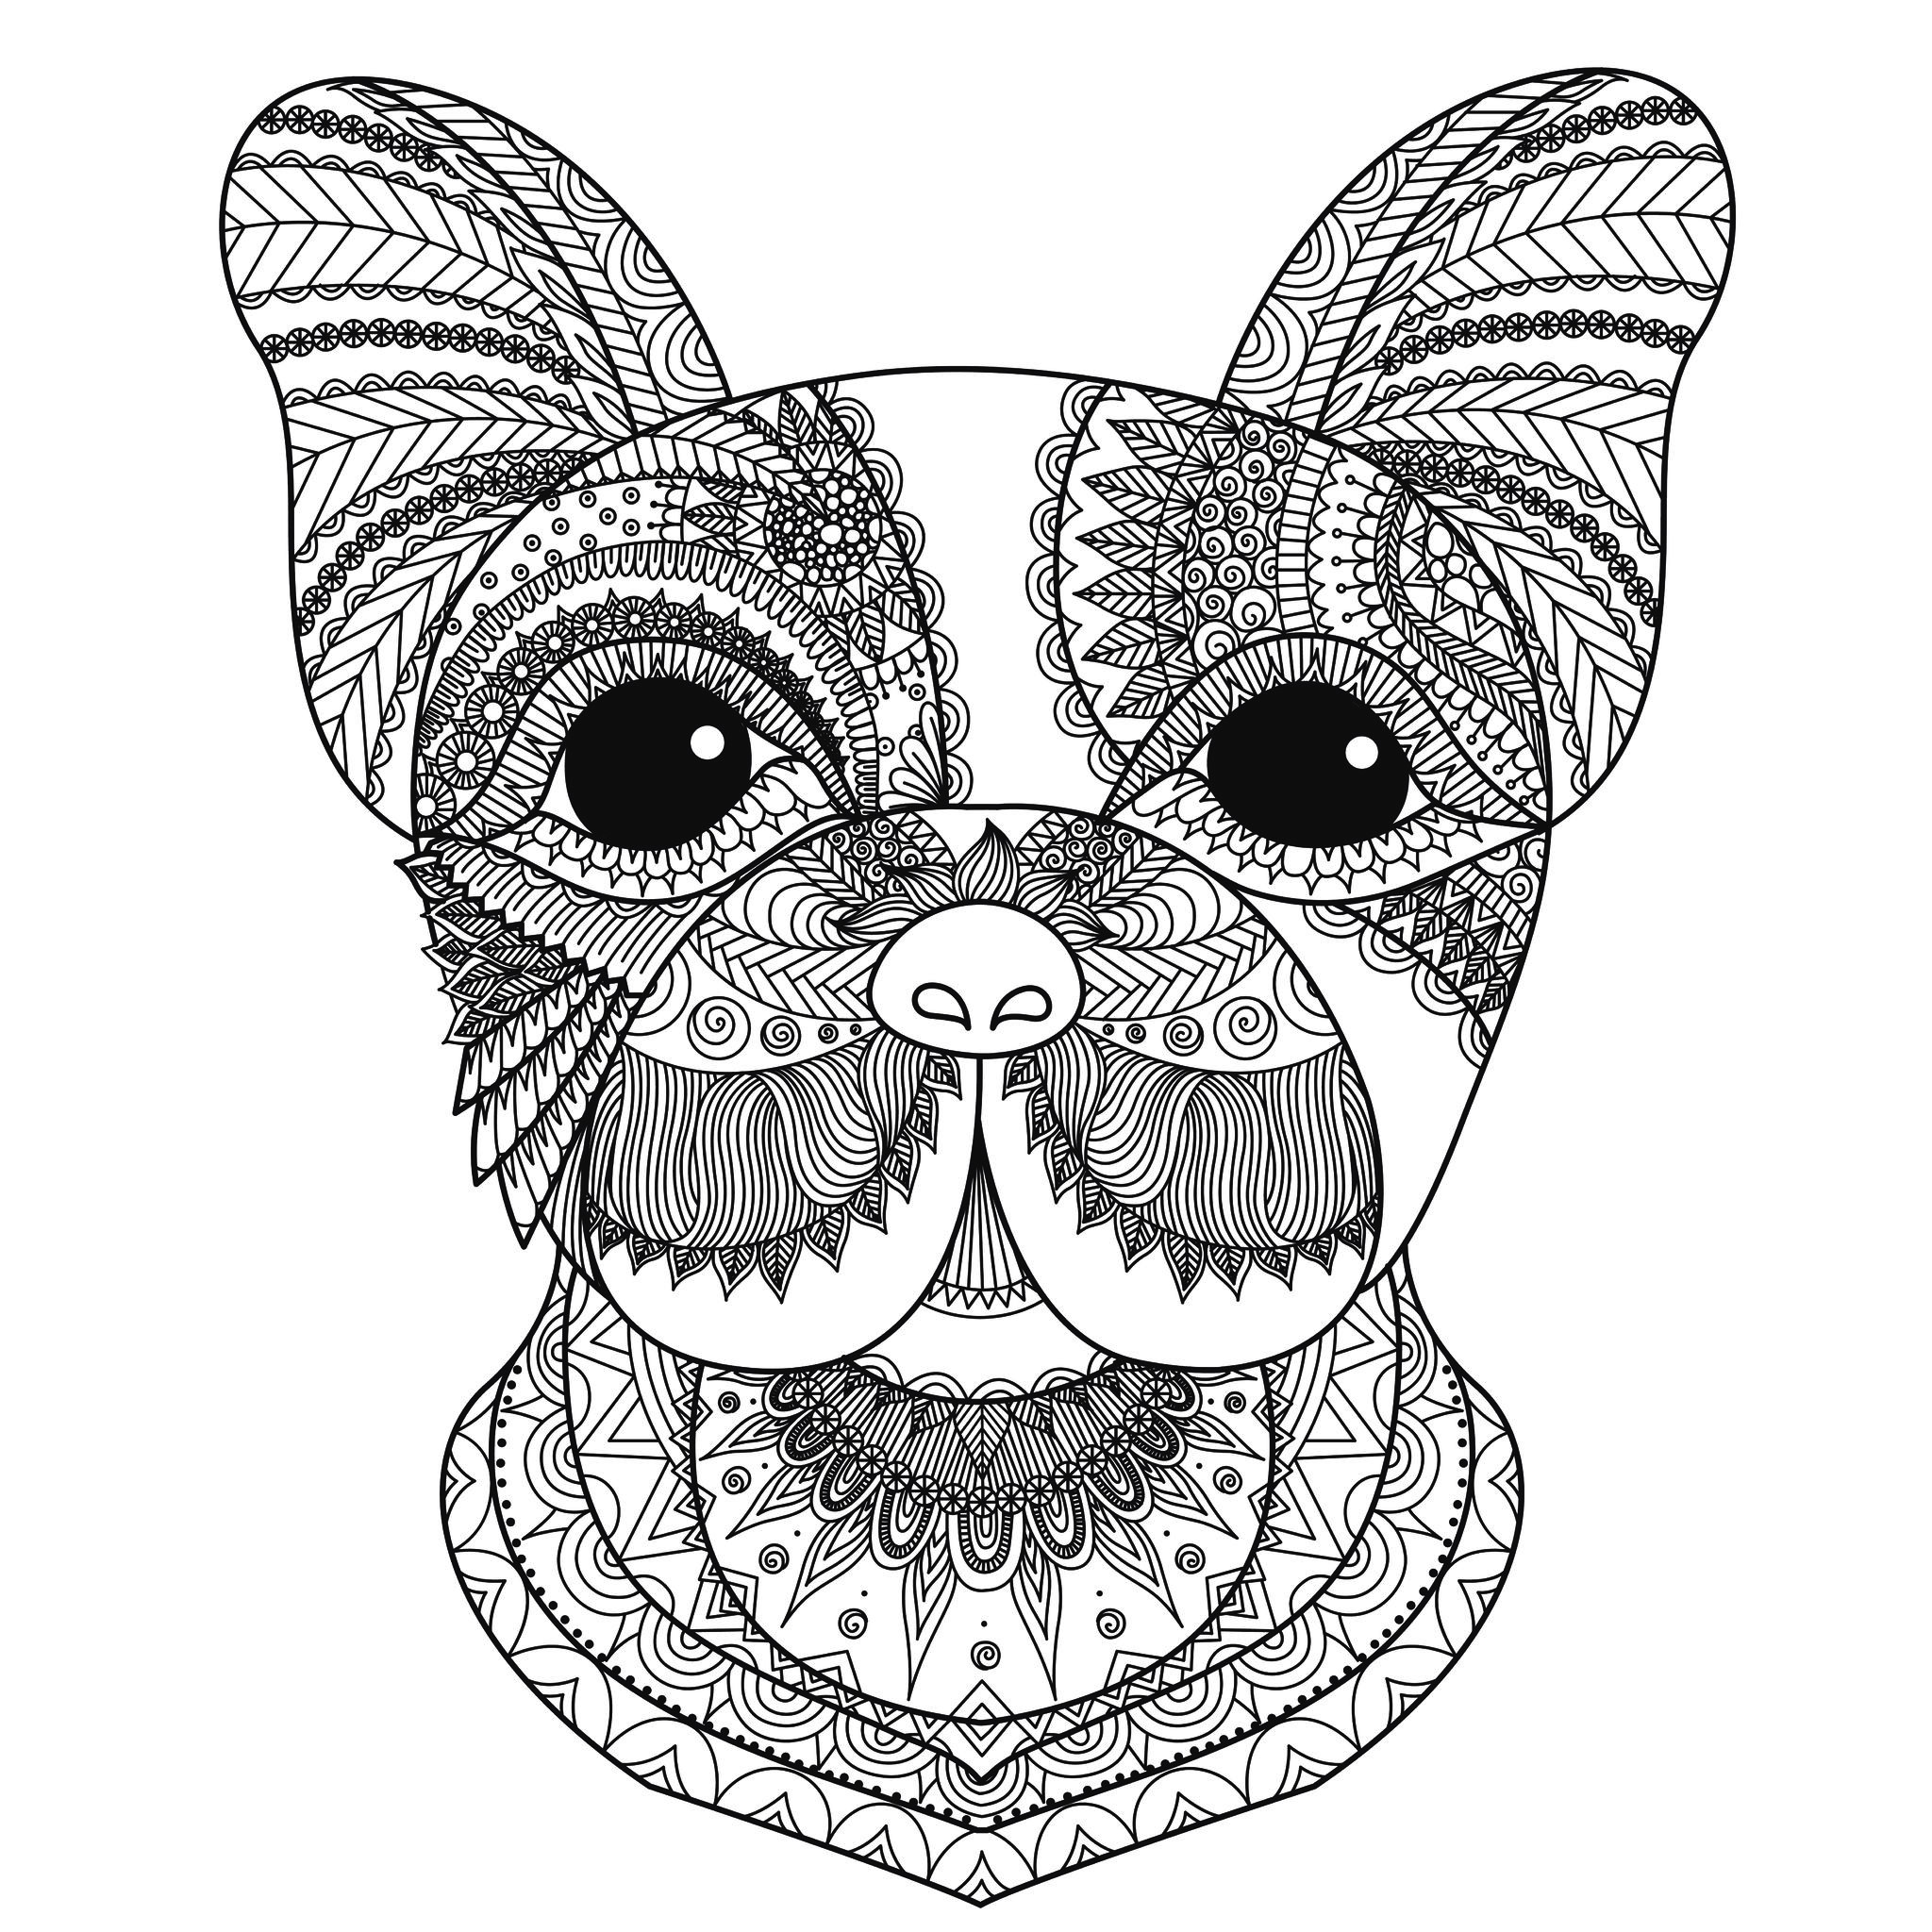 French bulldog puppy zentangle stylized. Good for a tattoo !, Artist : Bimdeedee   Source : 123rf